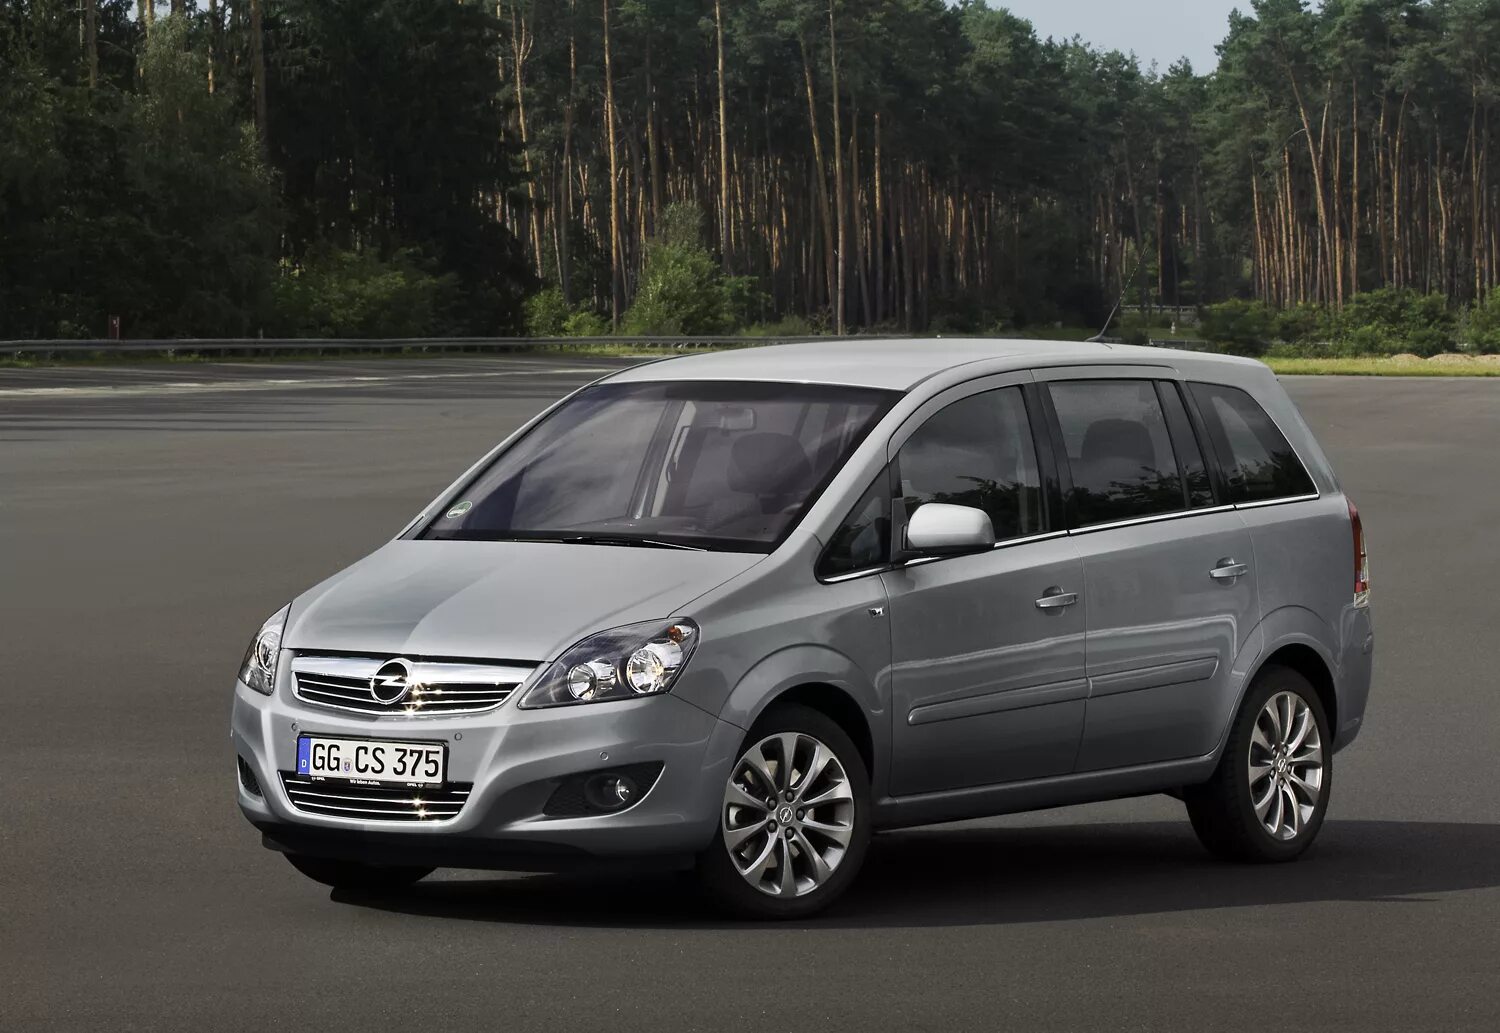 Opel Zafira b 2014. Opel Zafira b 2011. Опель Зафира б 2011. Зафира 2. Opel zafira 2011